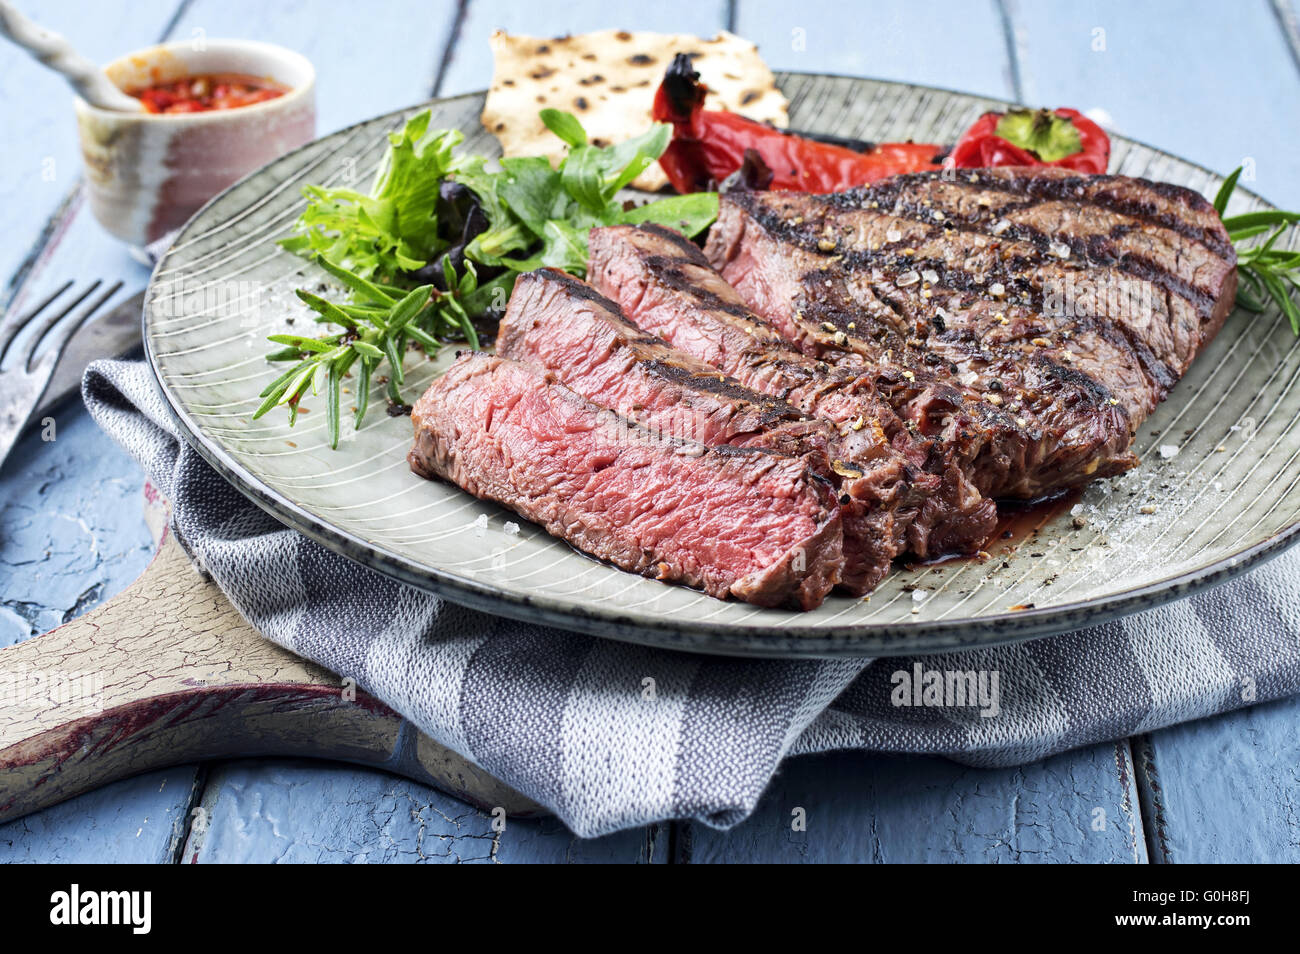 Charolais Steak on Plate Stock Photo